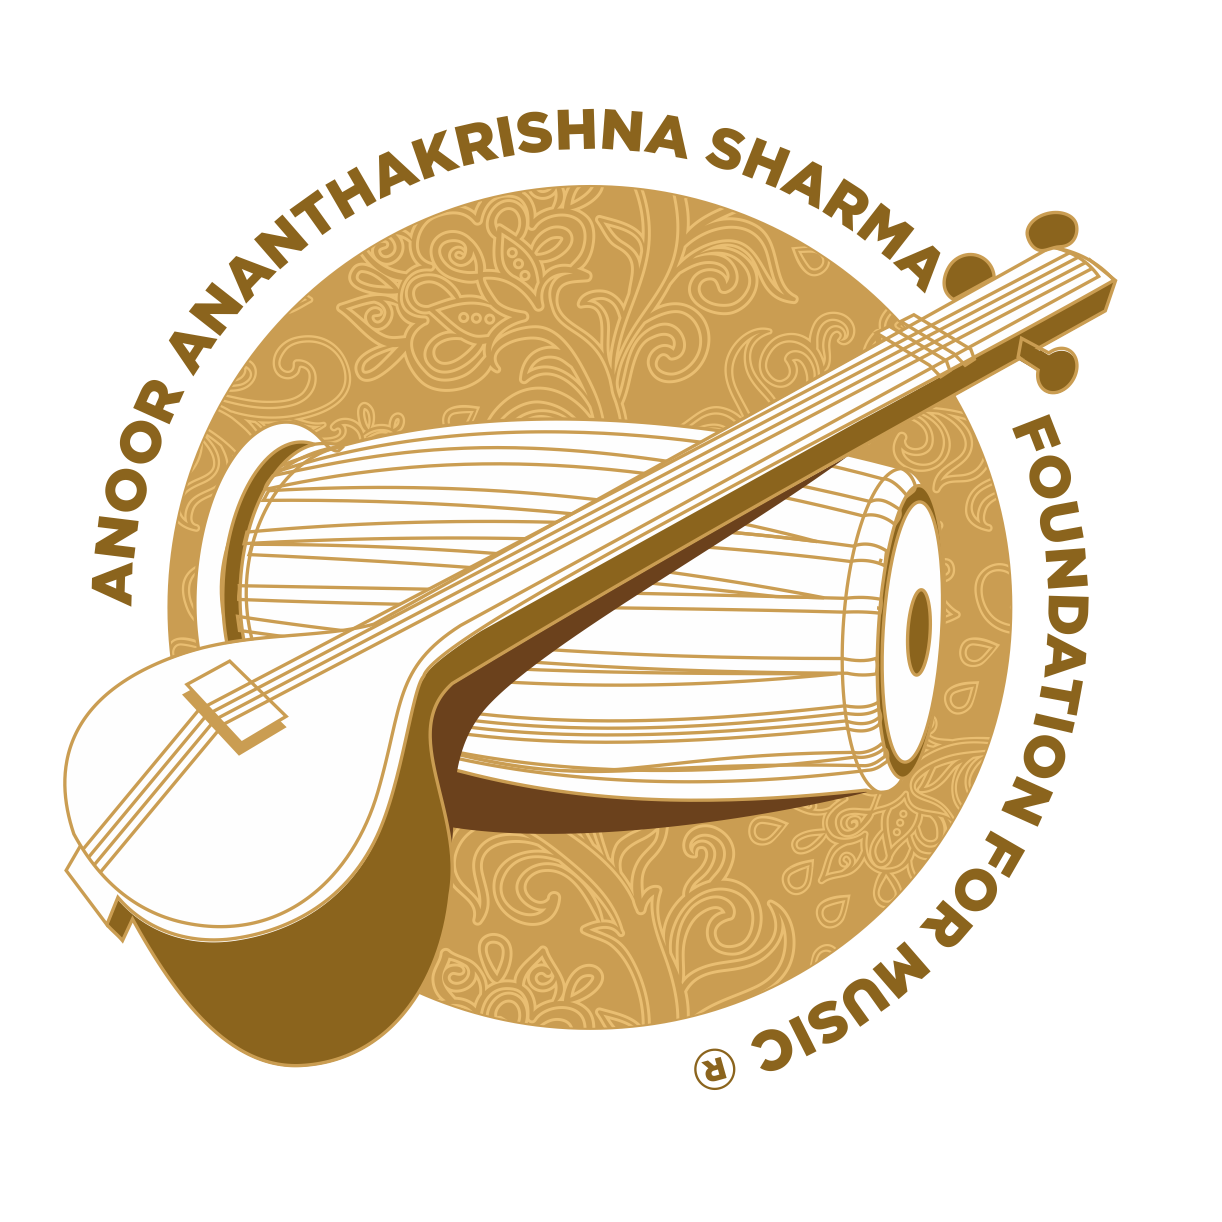 Anoor Ananthakrishna Sharma Foundation for Music